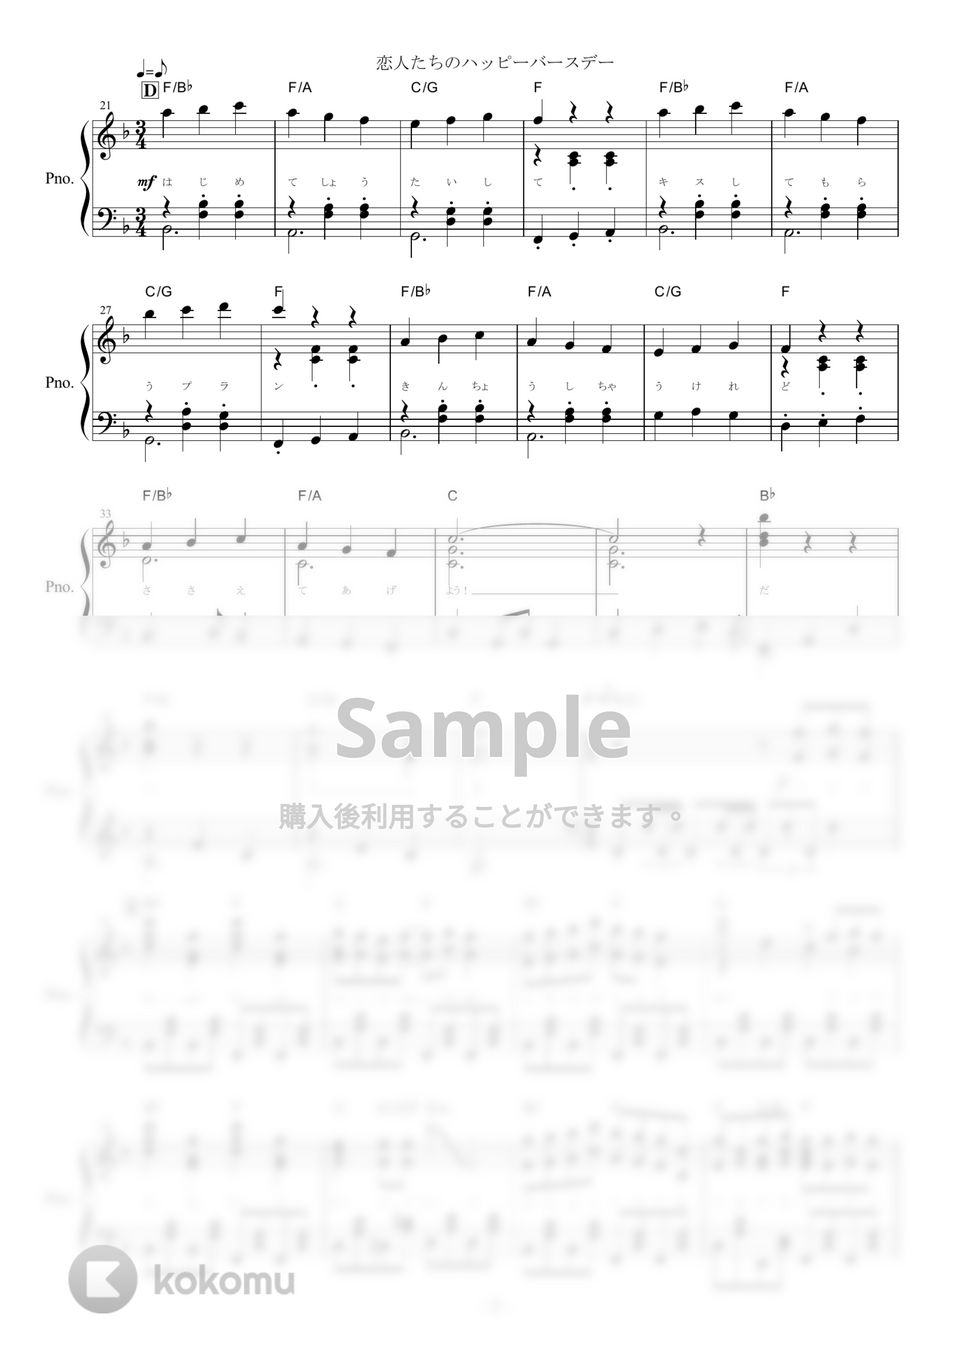 HoneyWorks - 恋人たちのハッピーバースデー (ピアノ楽譜/全7ページ) by yoshi